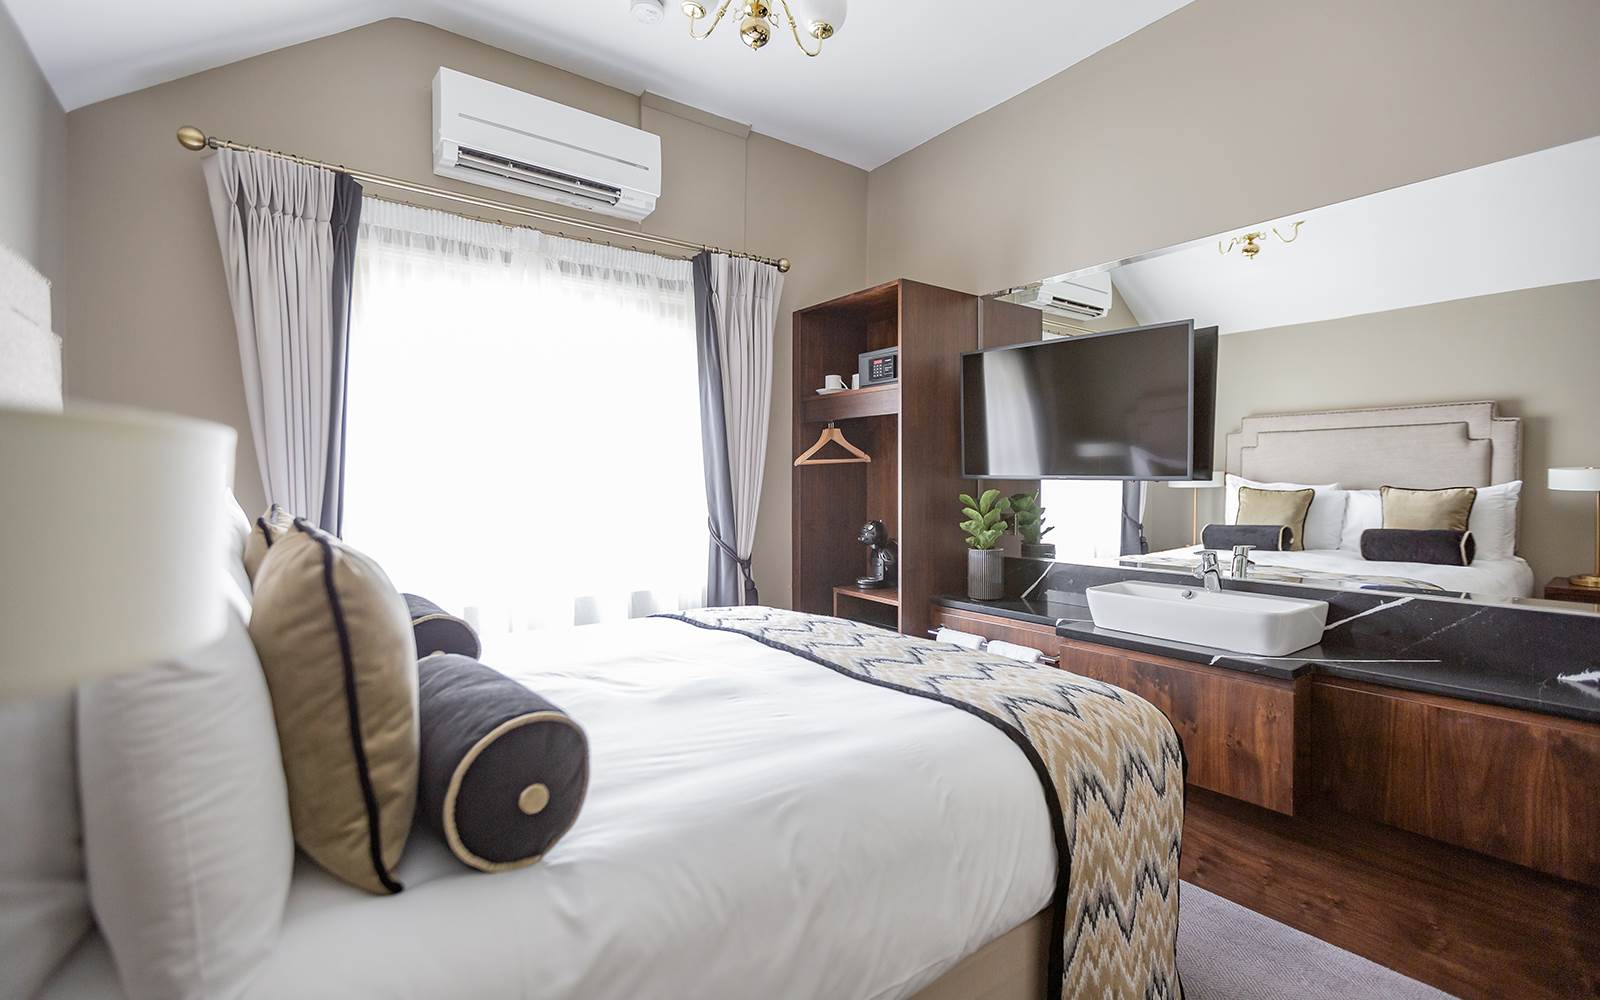 Luxury 3-star hotel rooms in Dublin